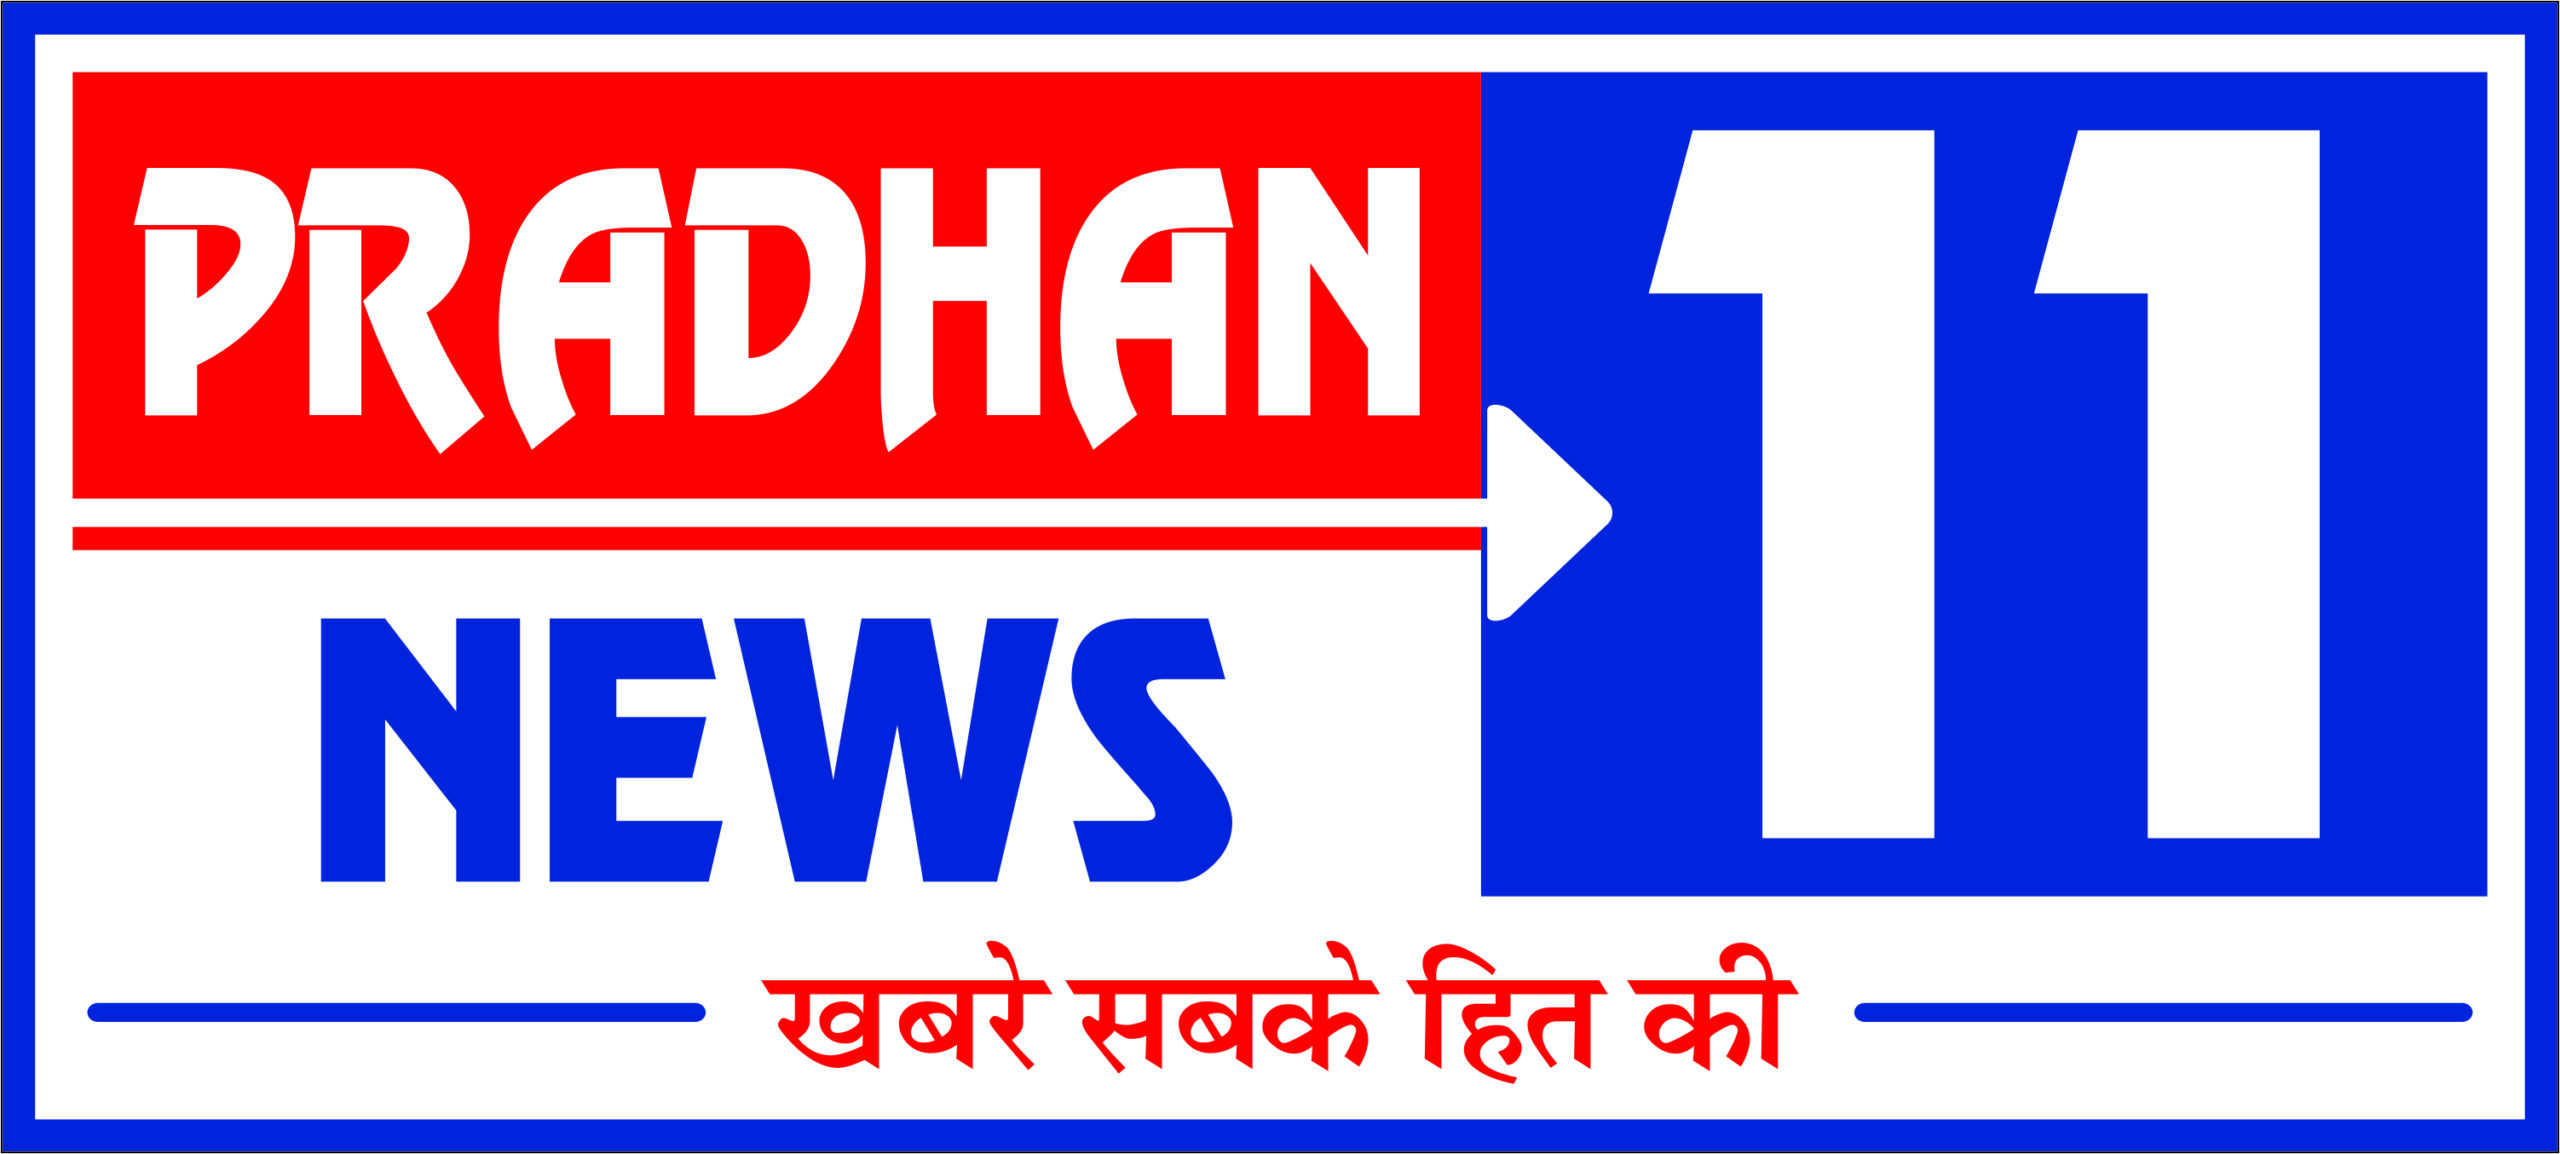 pradhannews